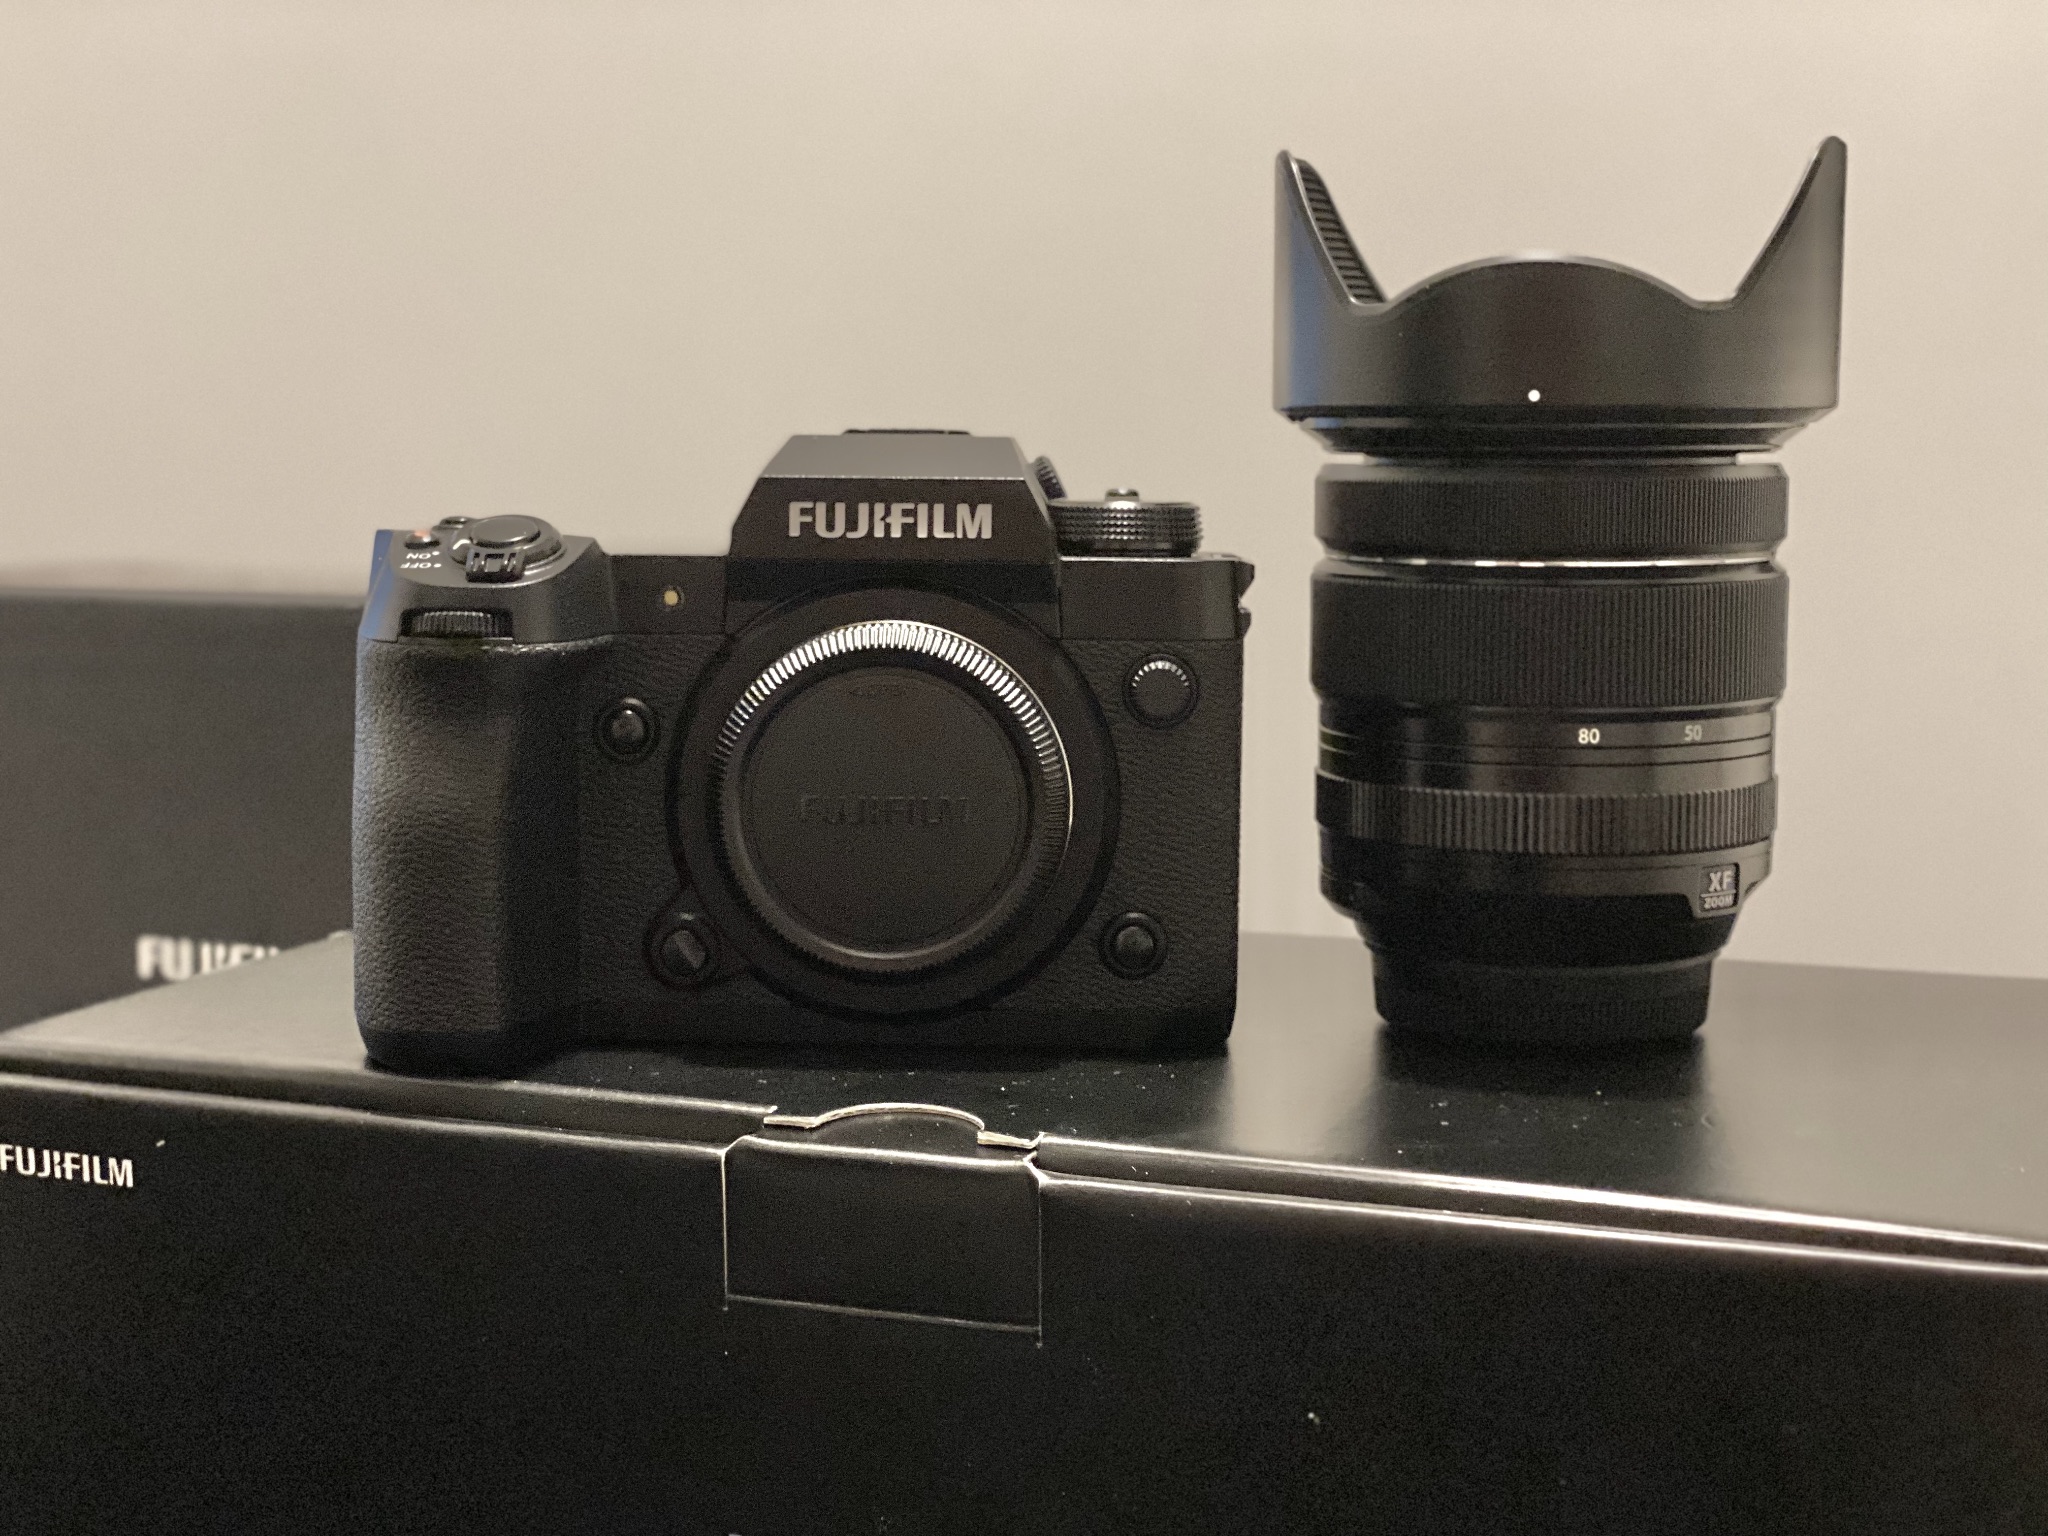 Fuji camera and lens sitting on Fuji box